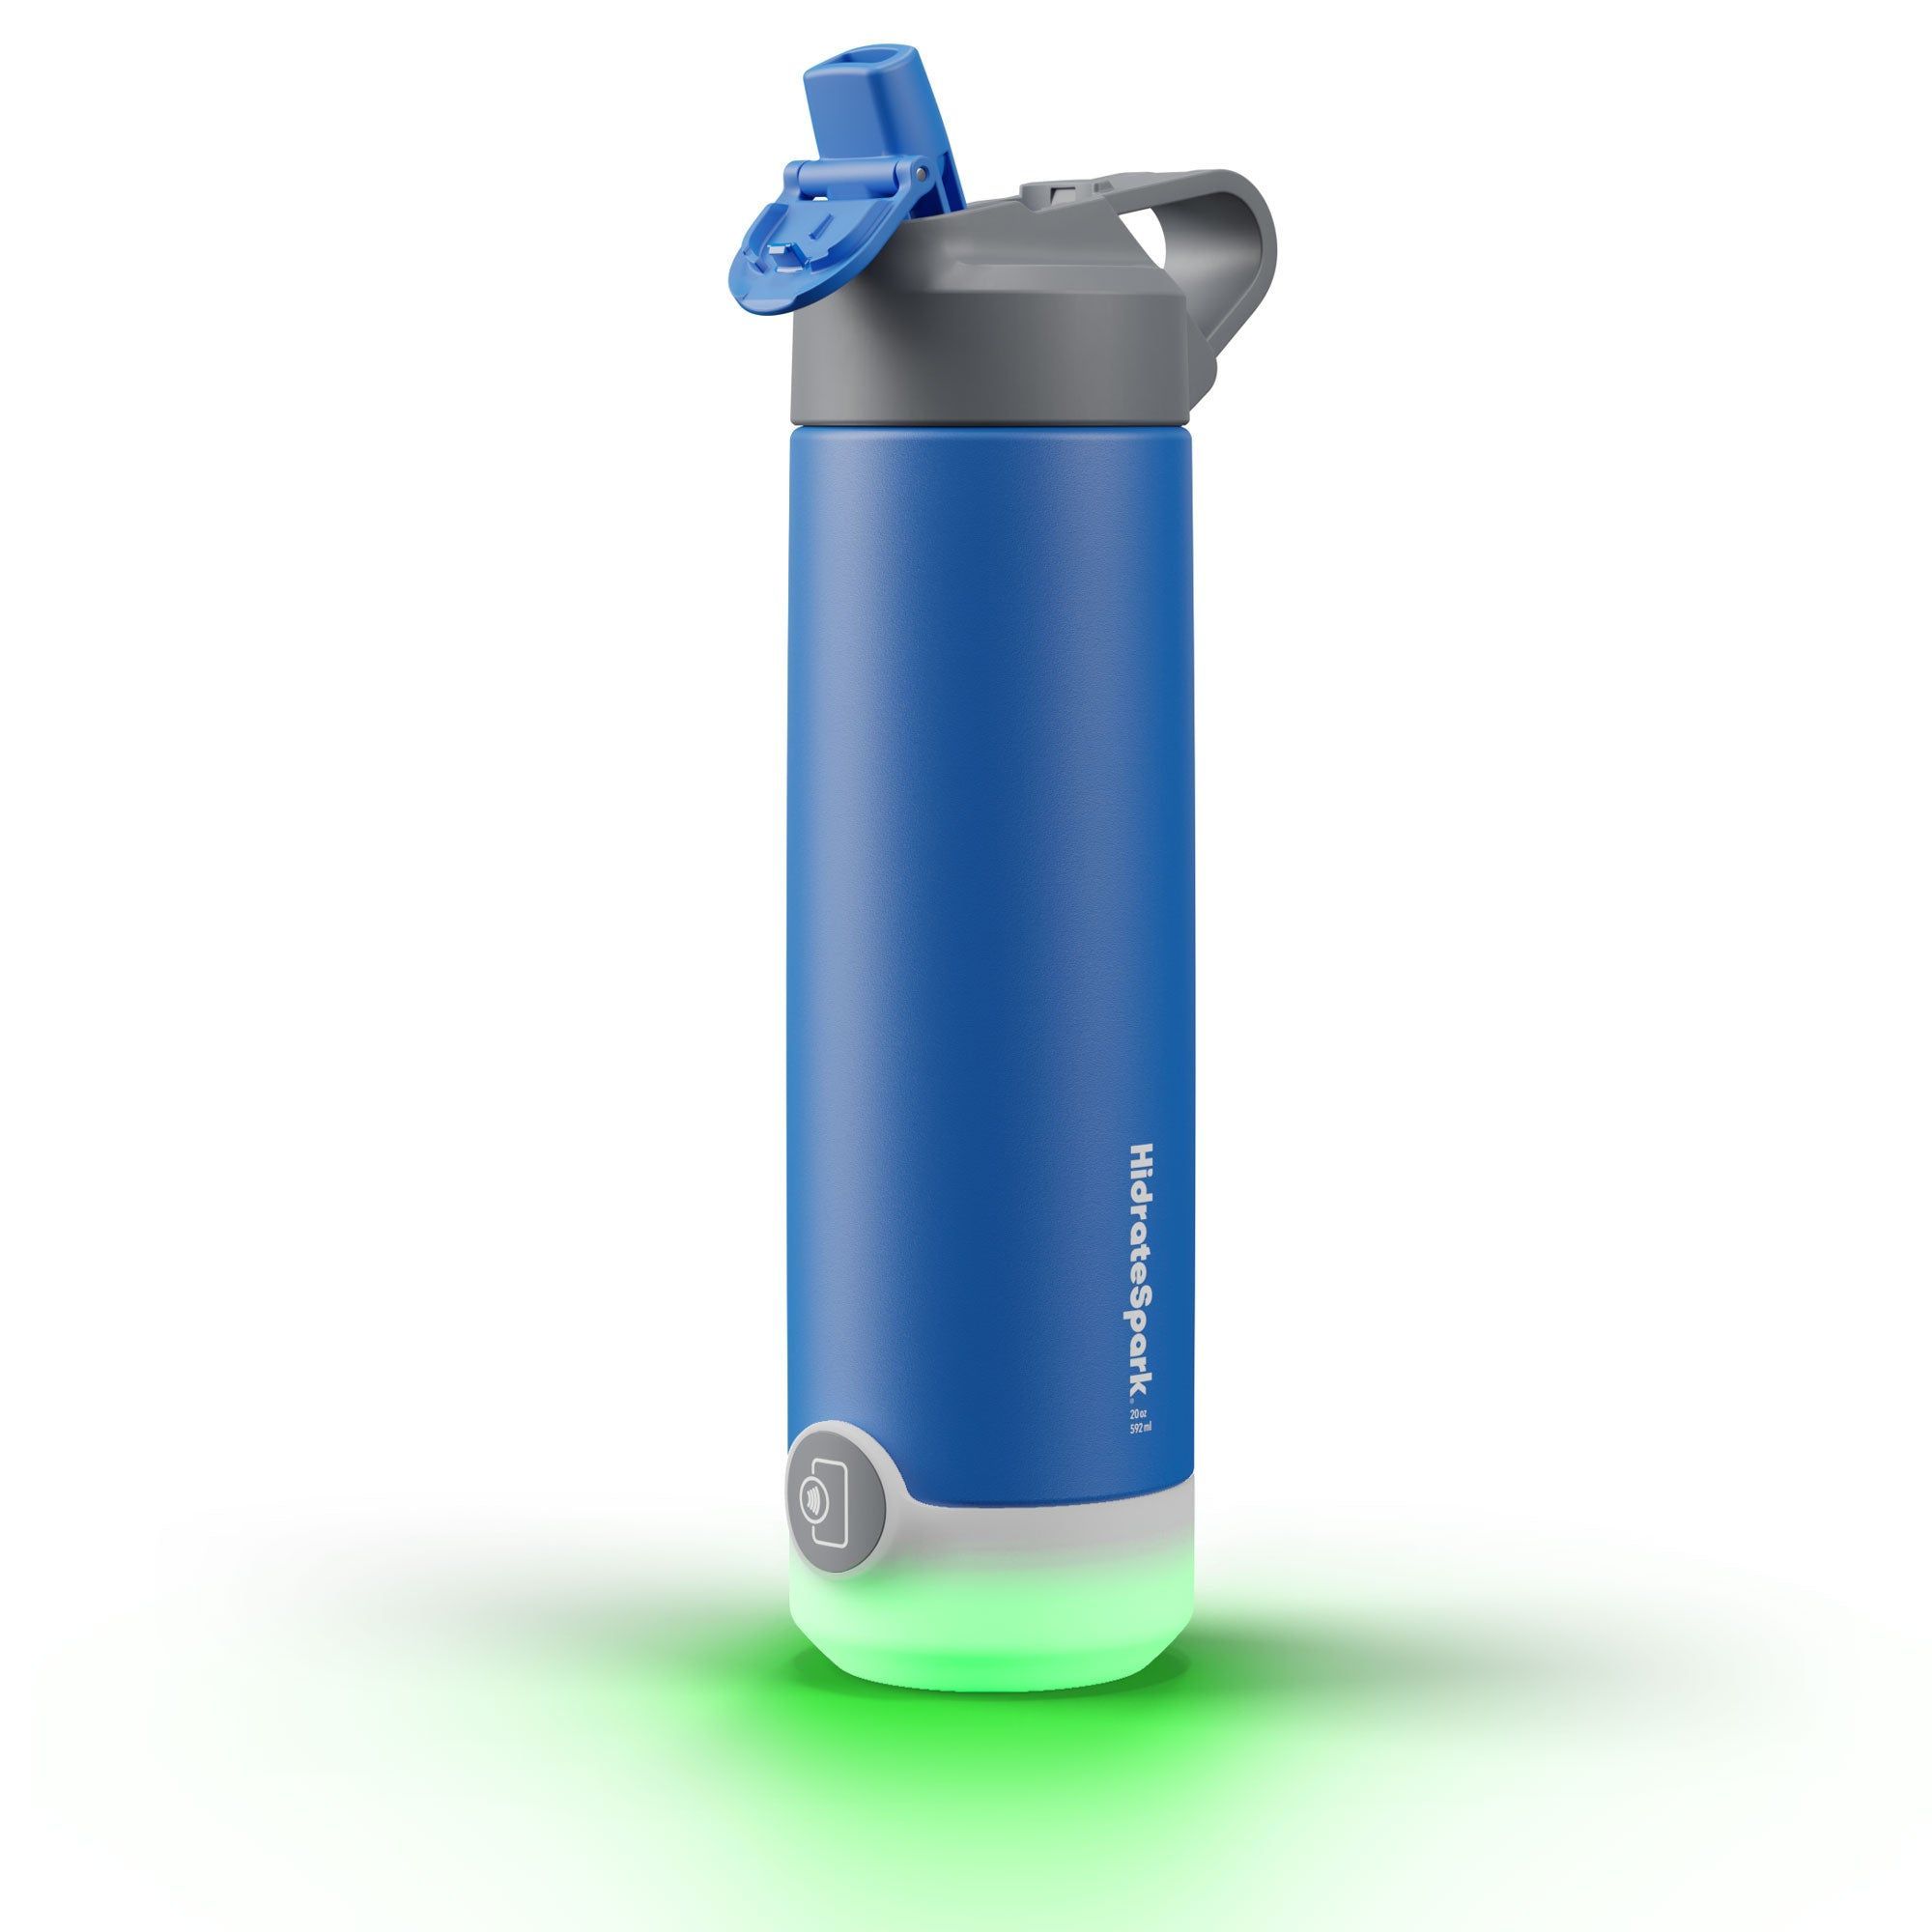 Smart Water Bottle 500ml UV Self-Cleaning Sterilization LED Touch Screen Tea 